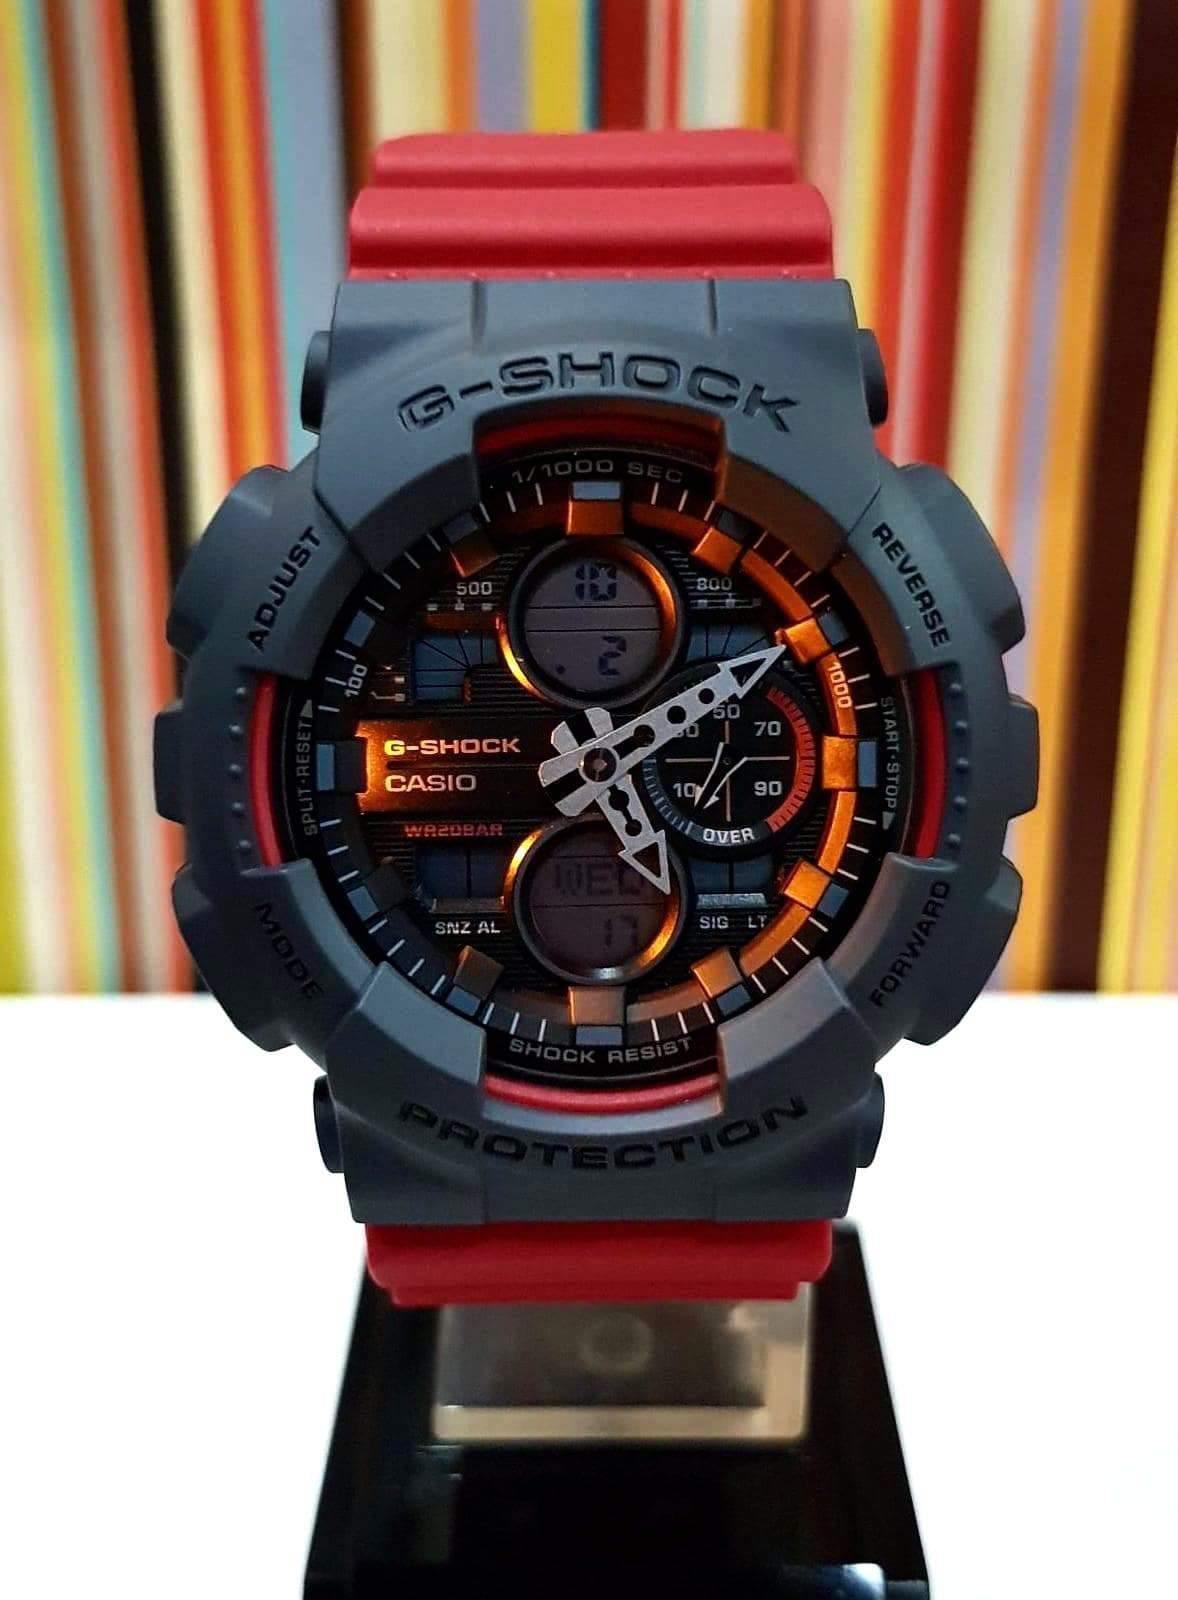 Casio G-Shock Analog-Digital Special Color Grey x Red Strap Watch Last Dance GA140-4ADR - Diligence1International